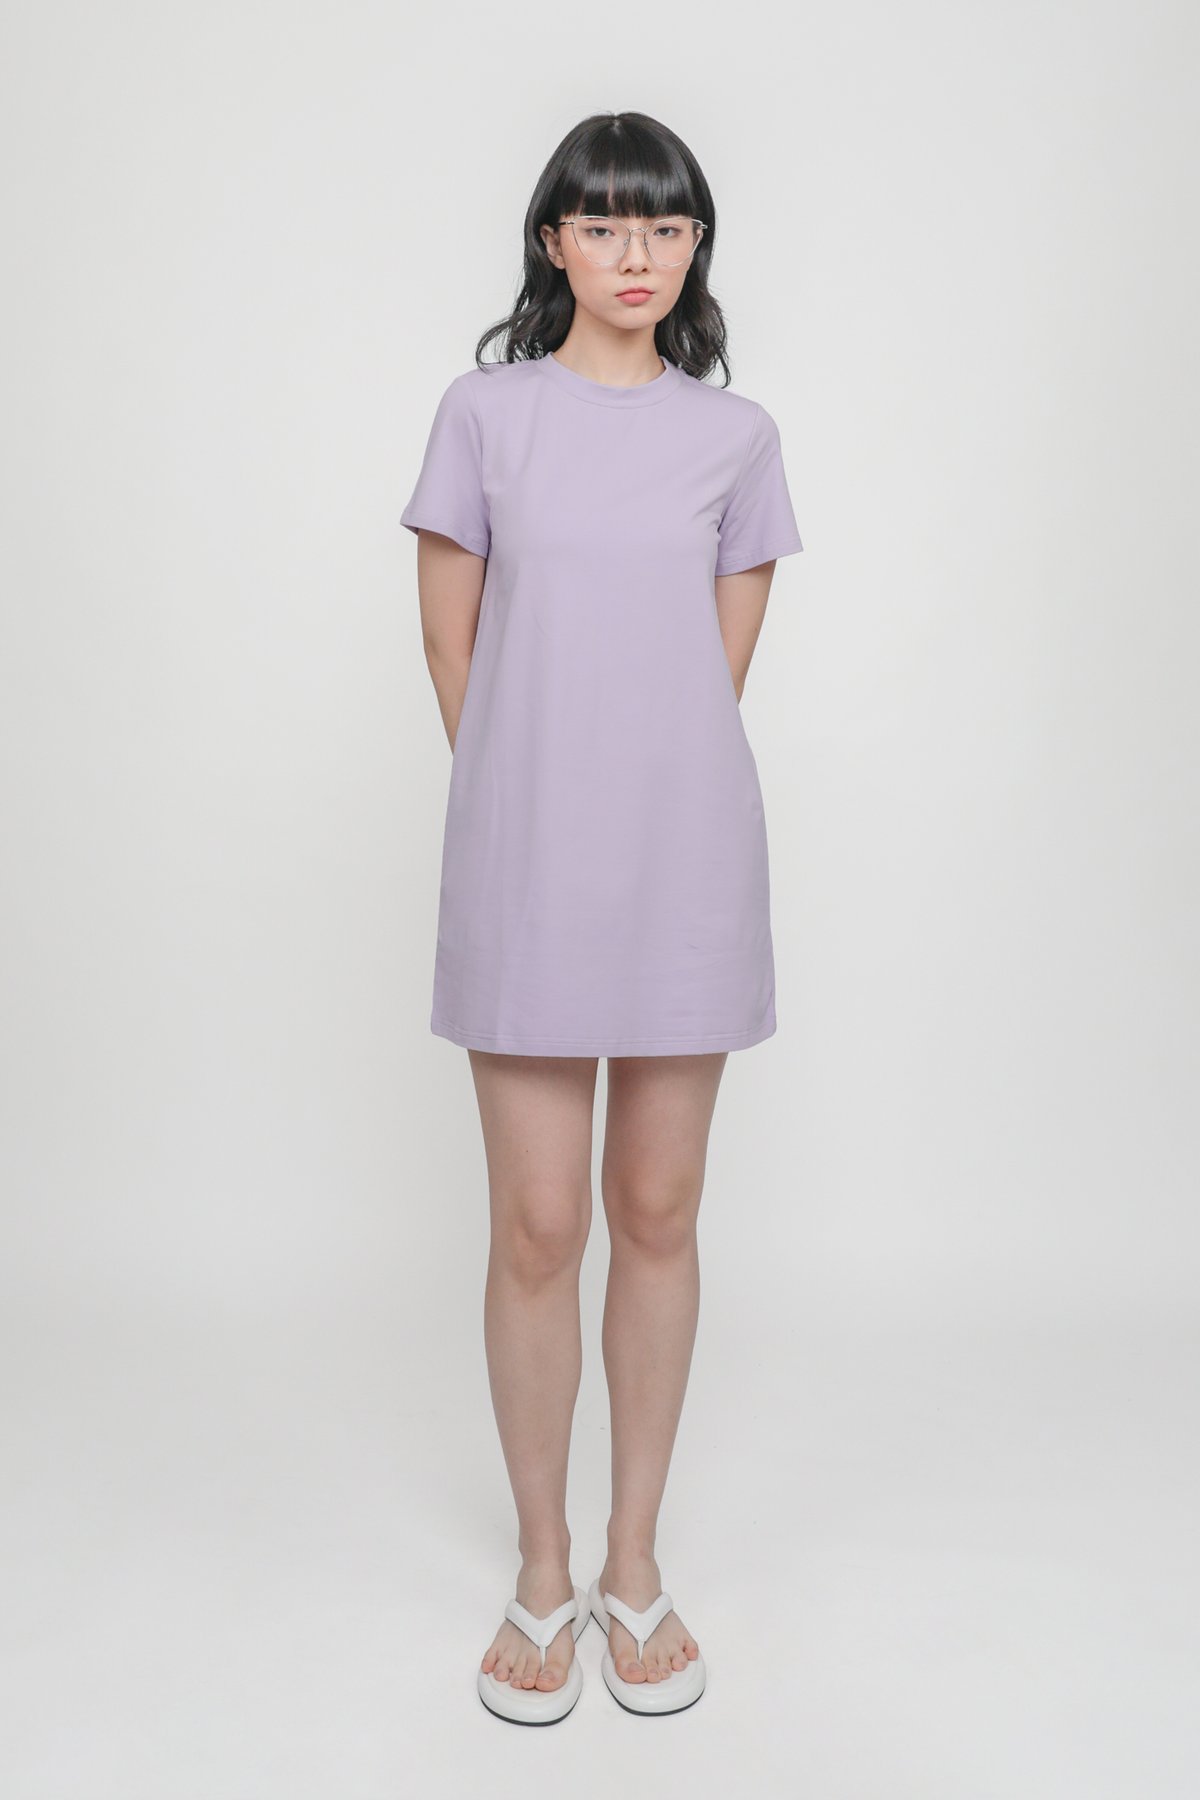 Ariane T-Shirt Dress (Lilac)